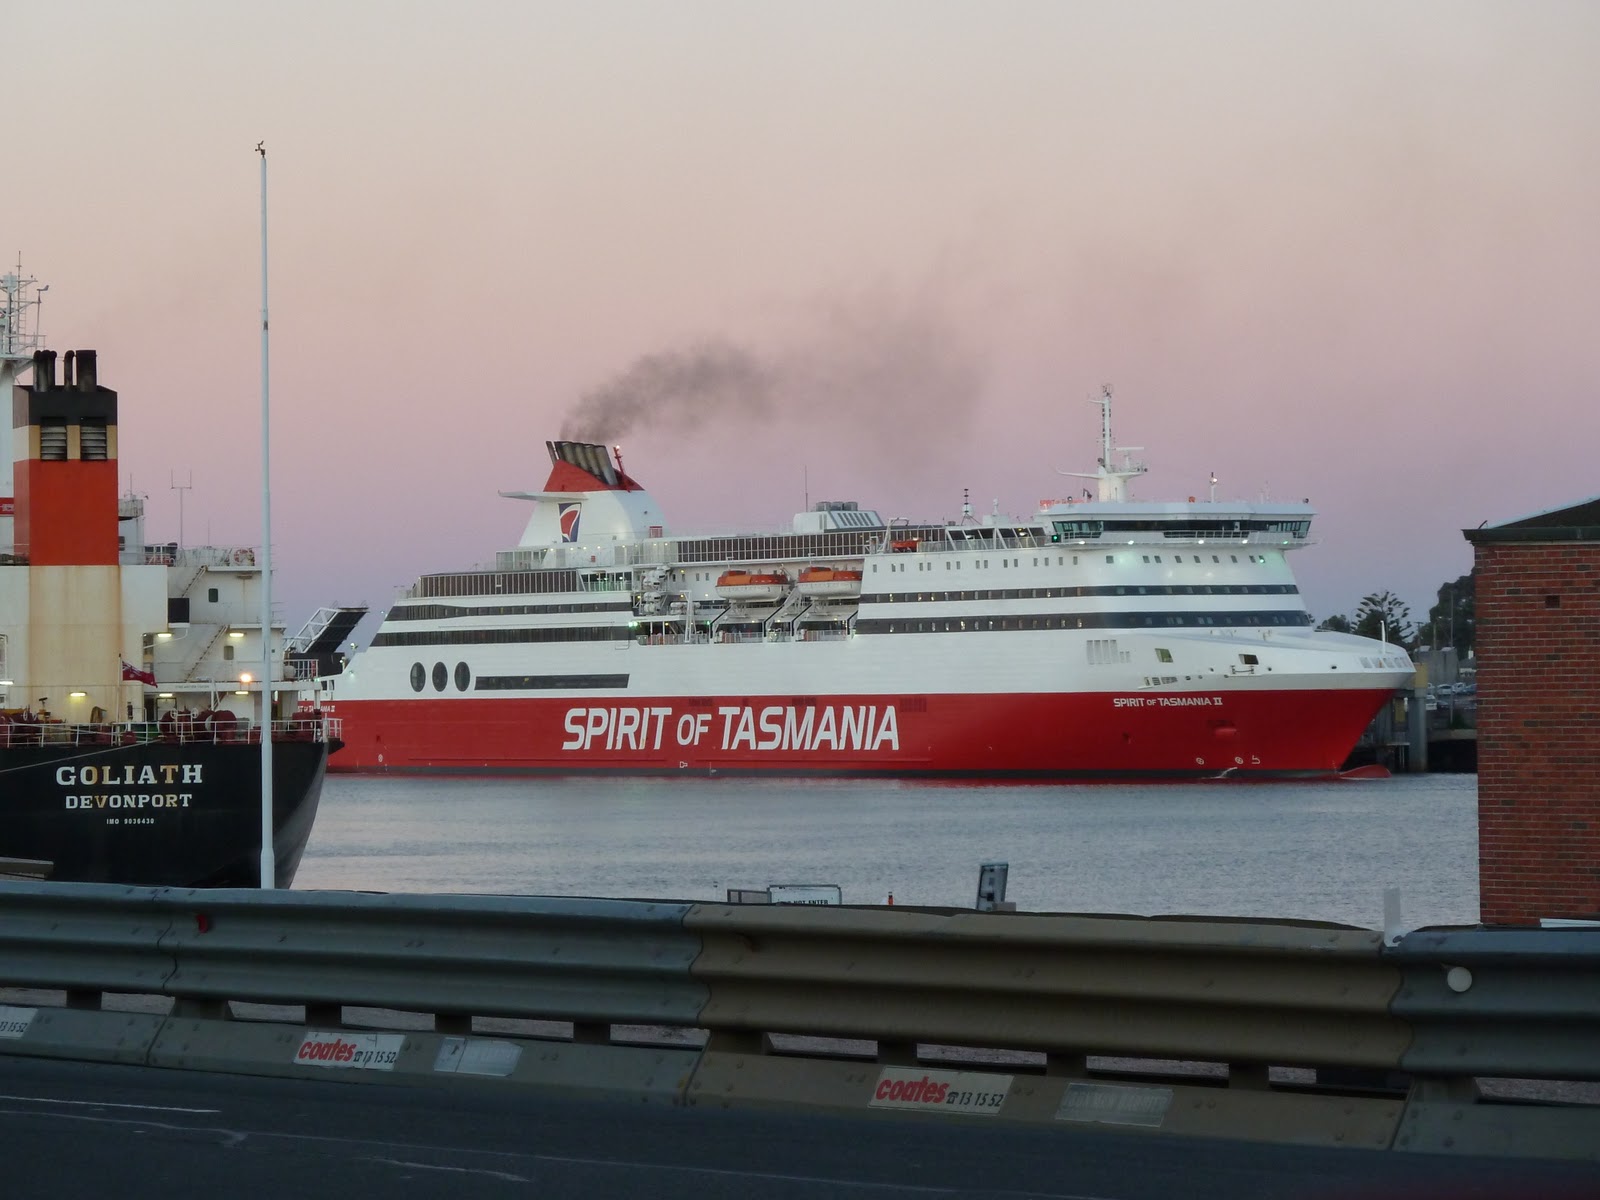 The Spirit of Tasmania ferry